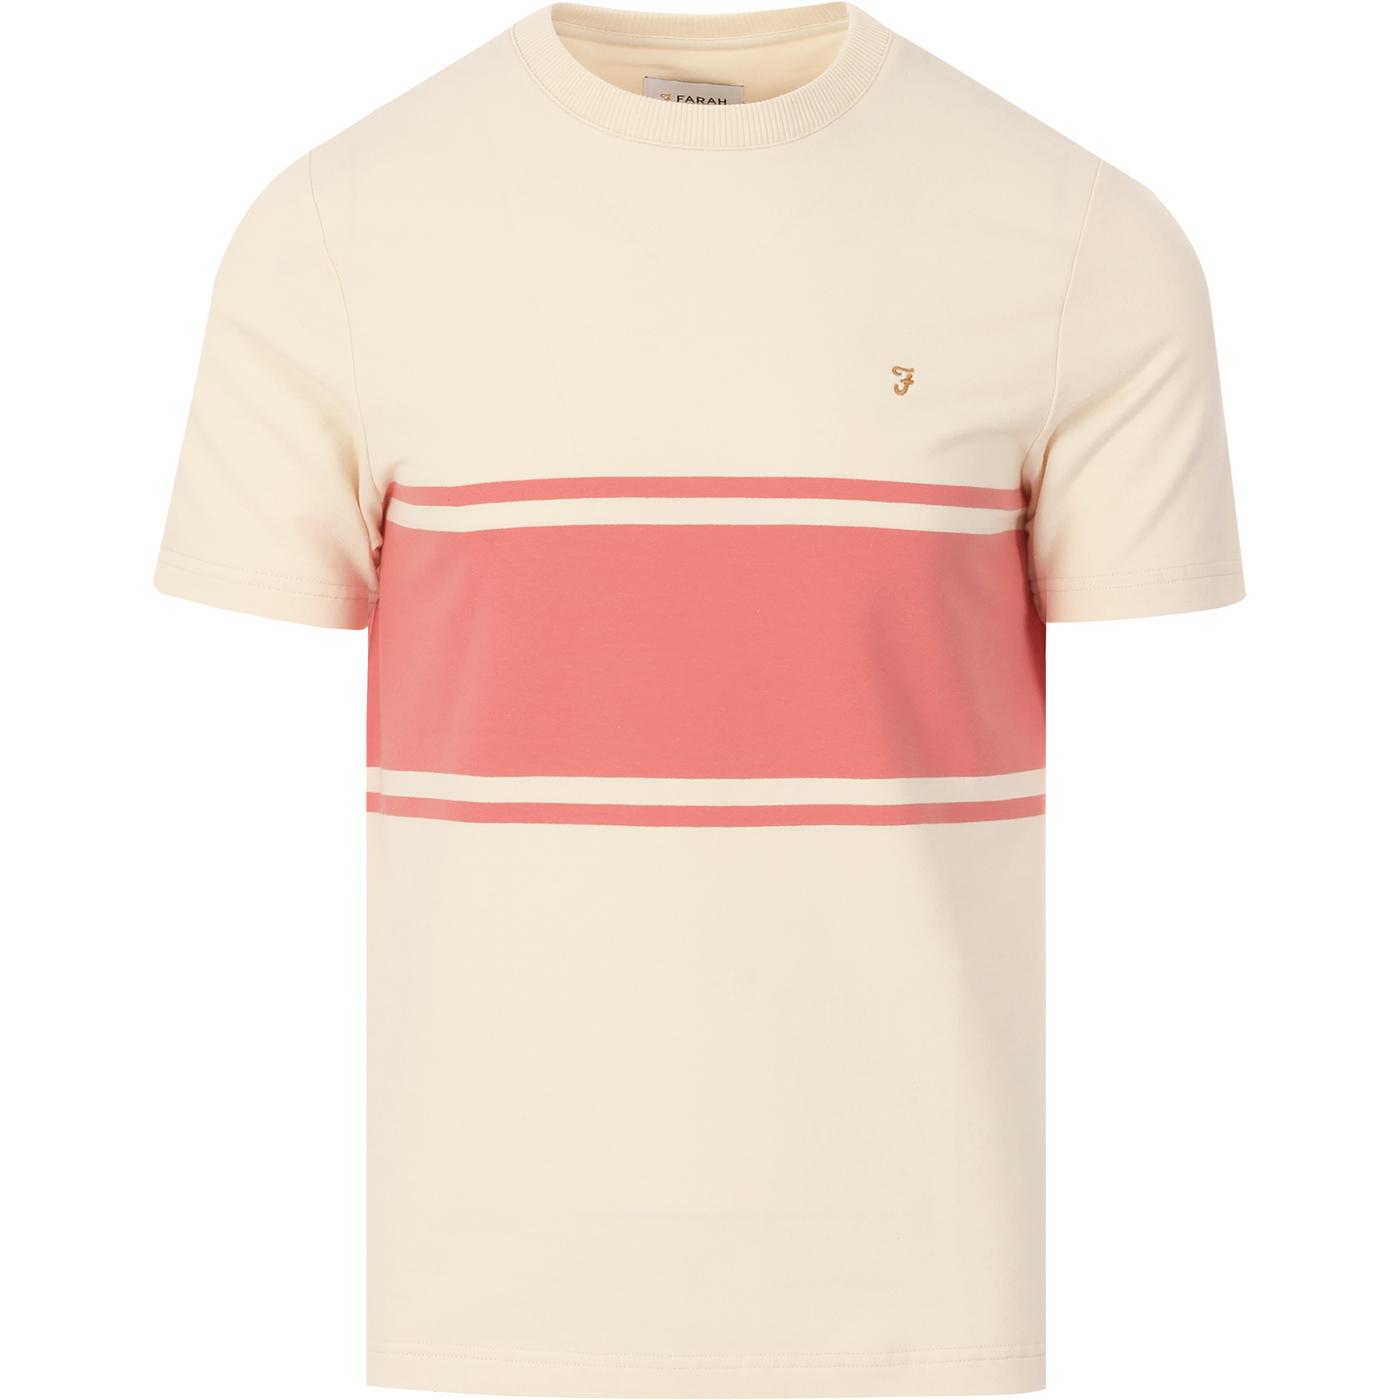 FARAH Belair Men's Retro Mod Block Stripe T-shirt in Cream